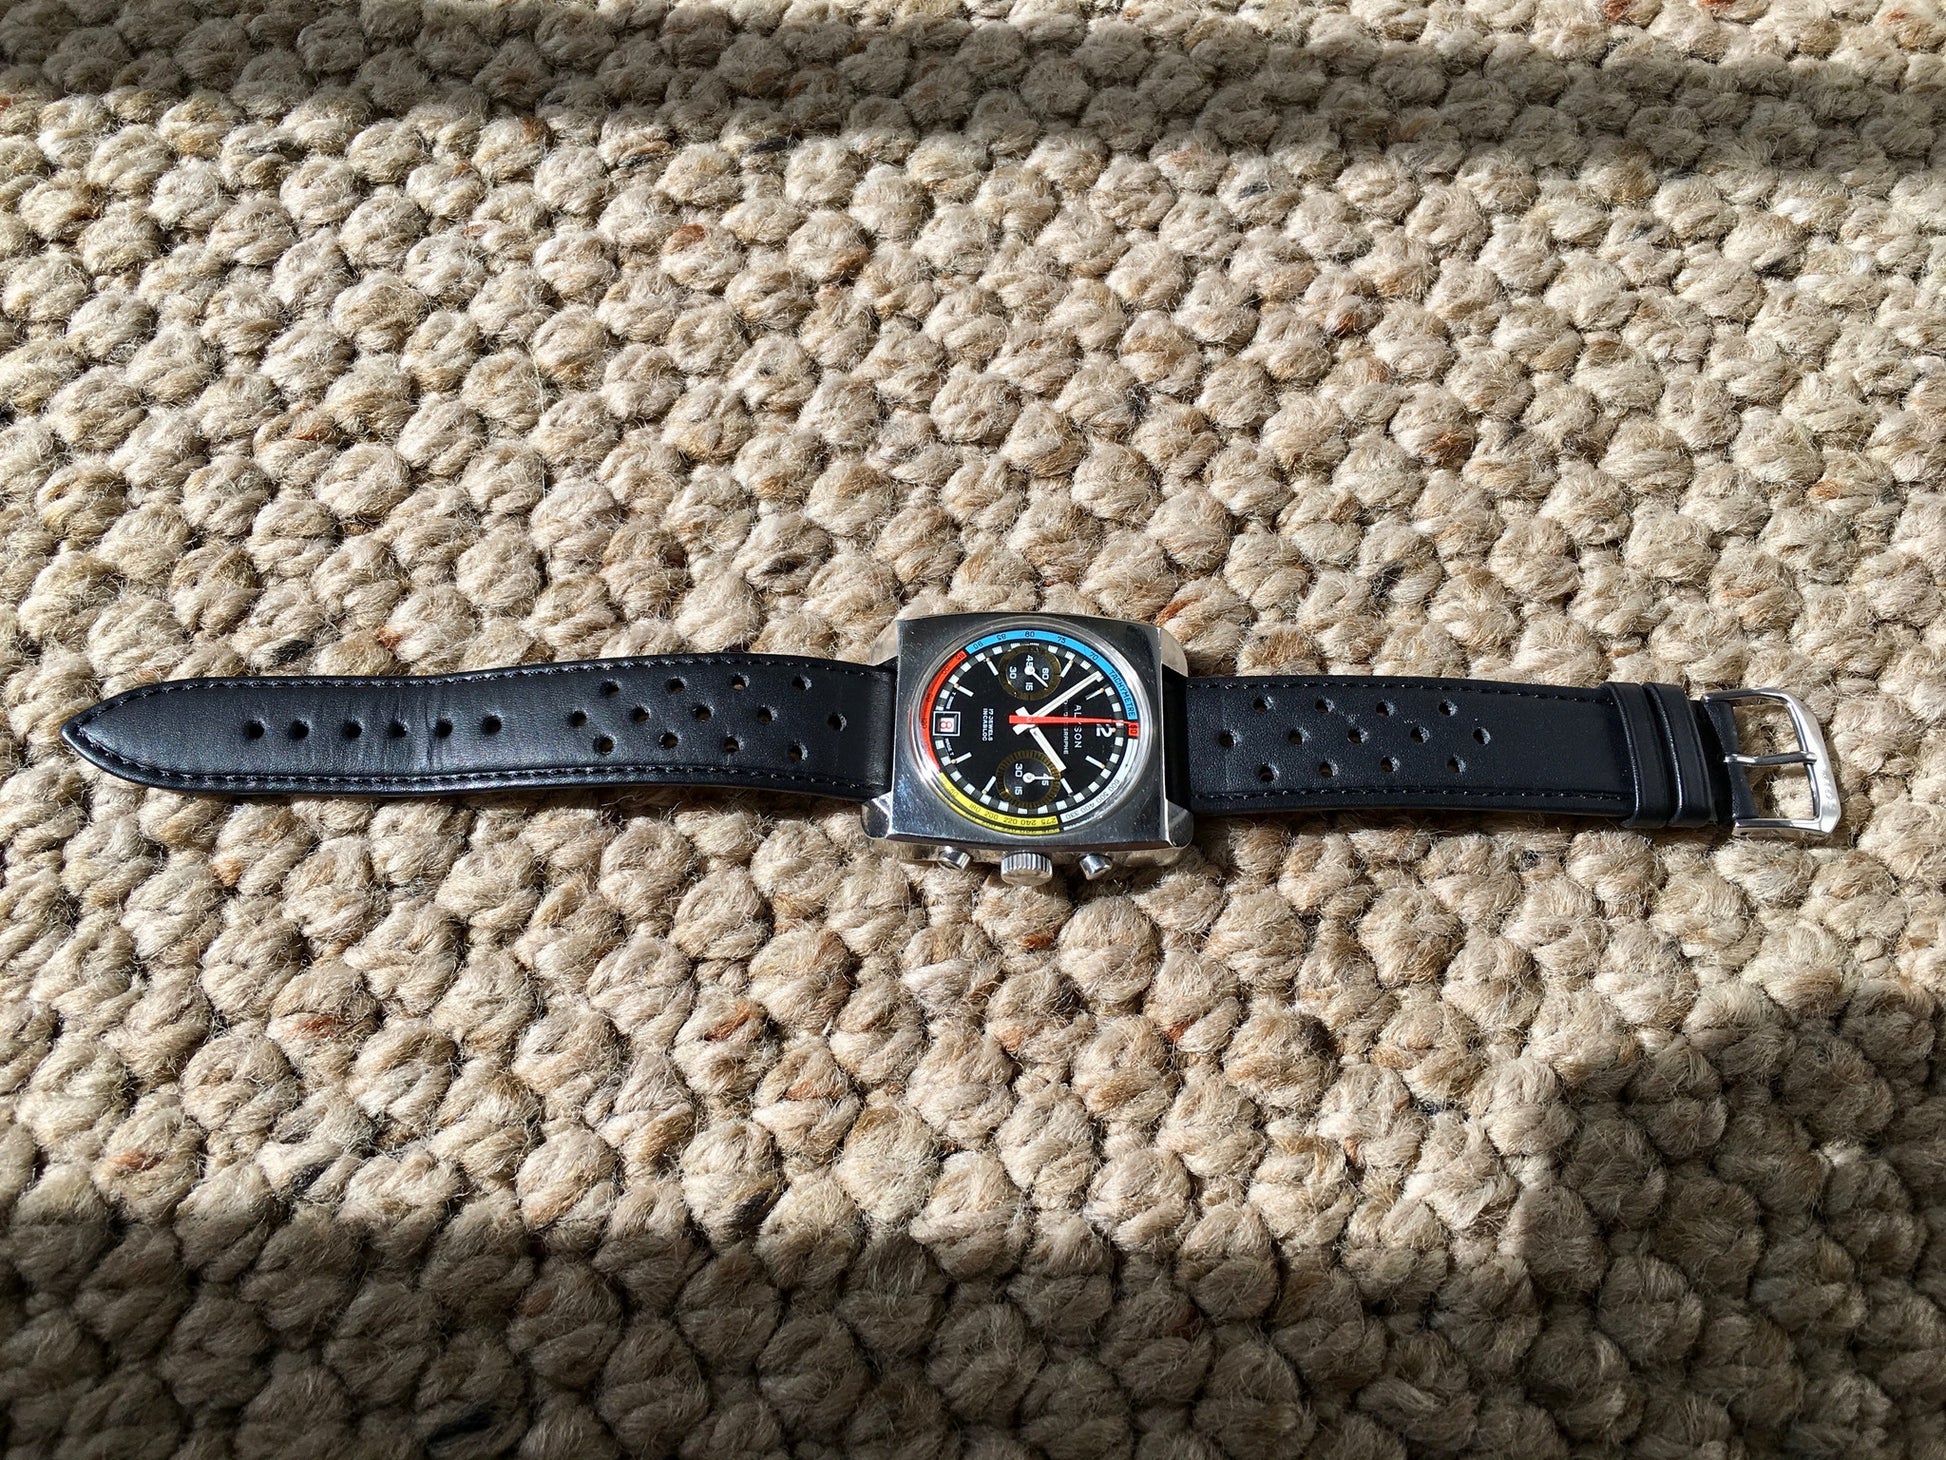 Vintage Alyson Steel Chronograph Vajloux 7734 Manual Wind Black Dial Wristwatch - Hashtag Watch Company